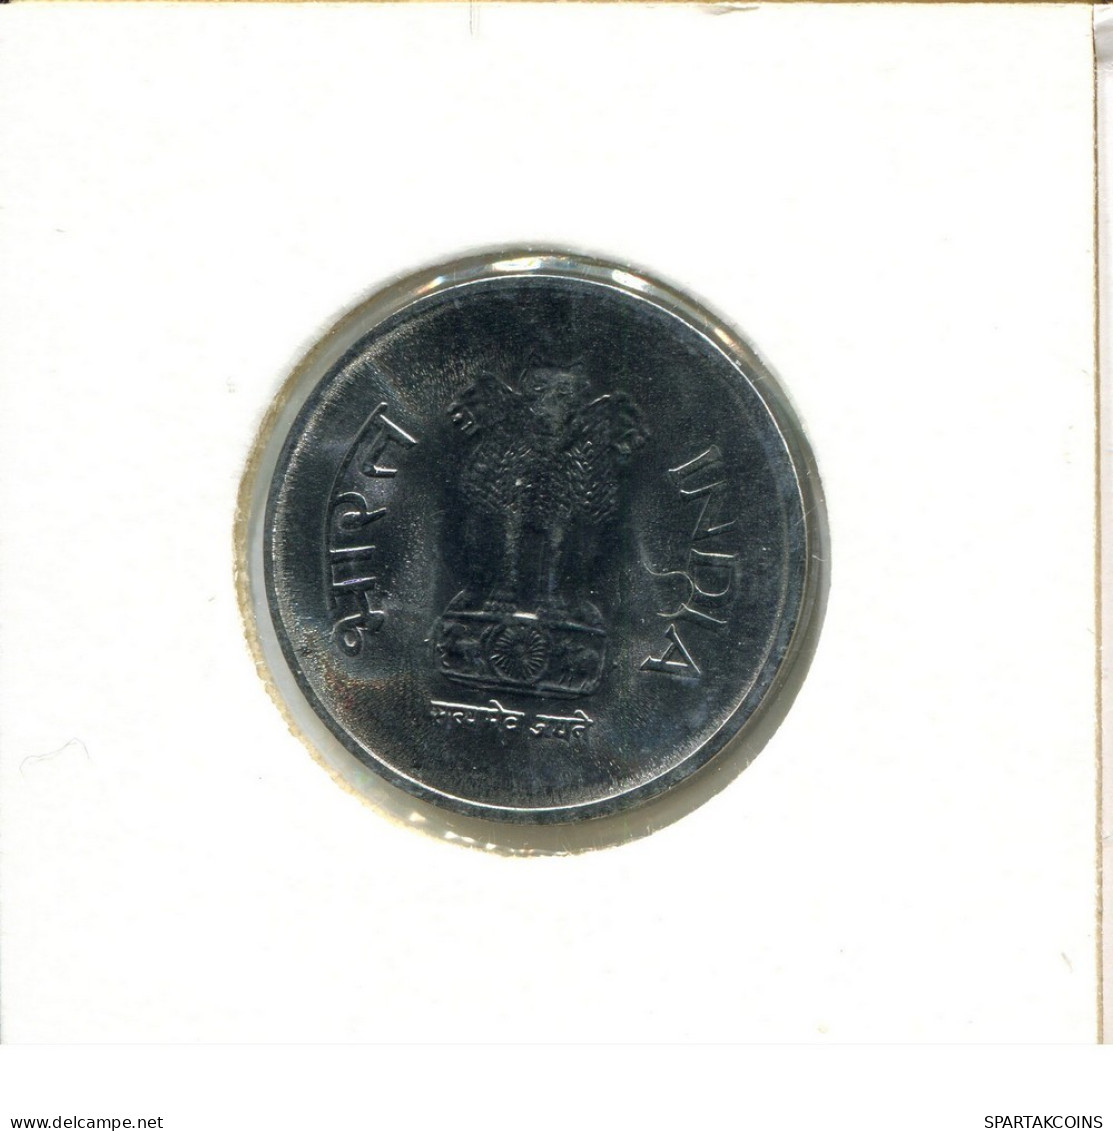 1 RUPEE 2003 INDIA Coin #AY828.U.A - Inde